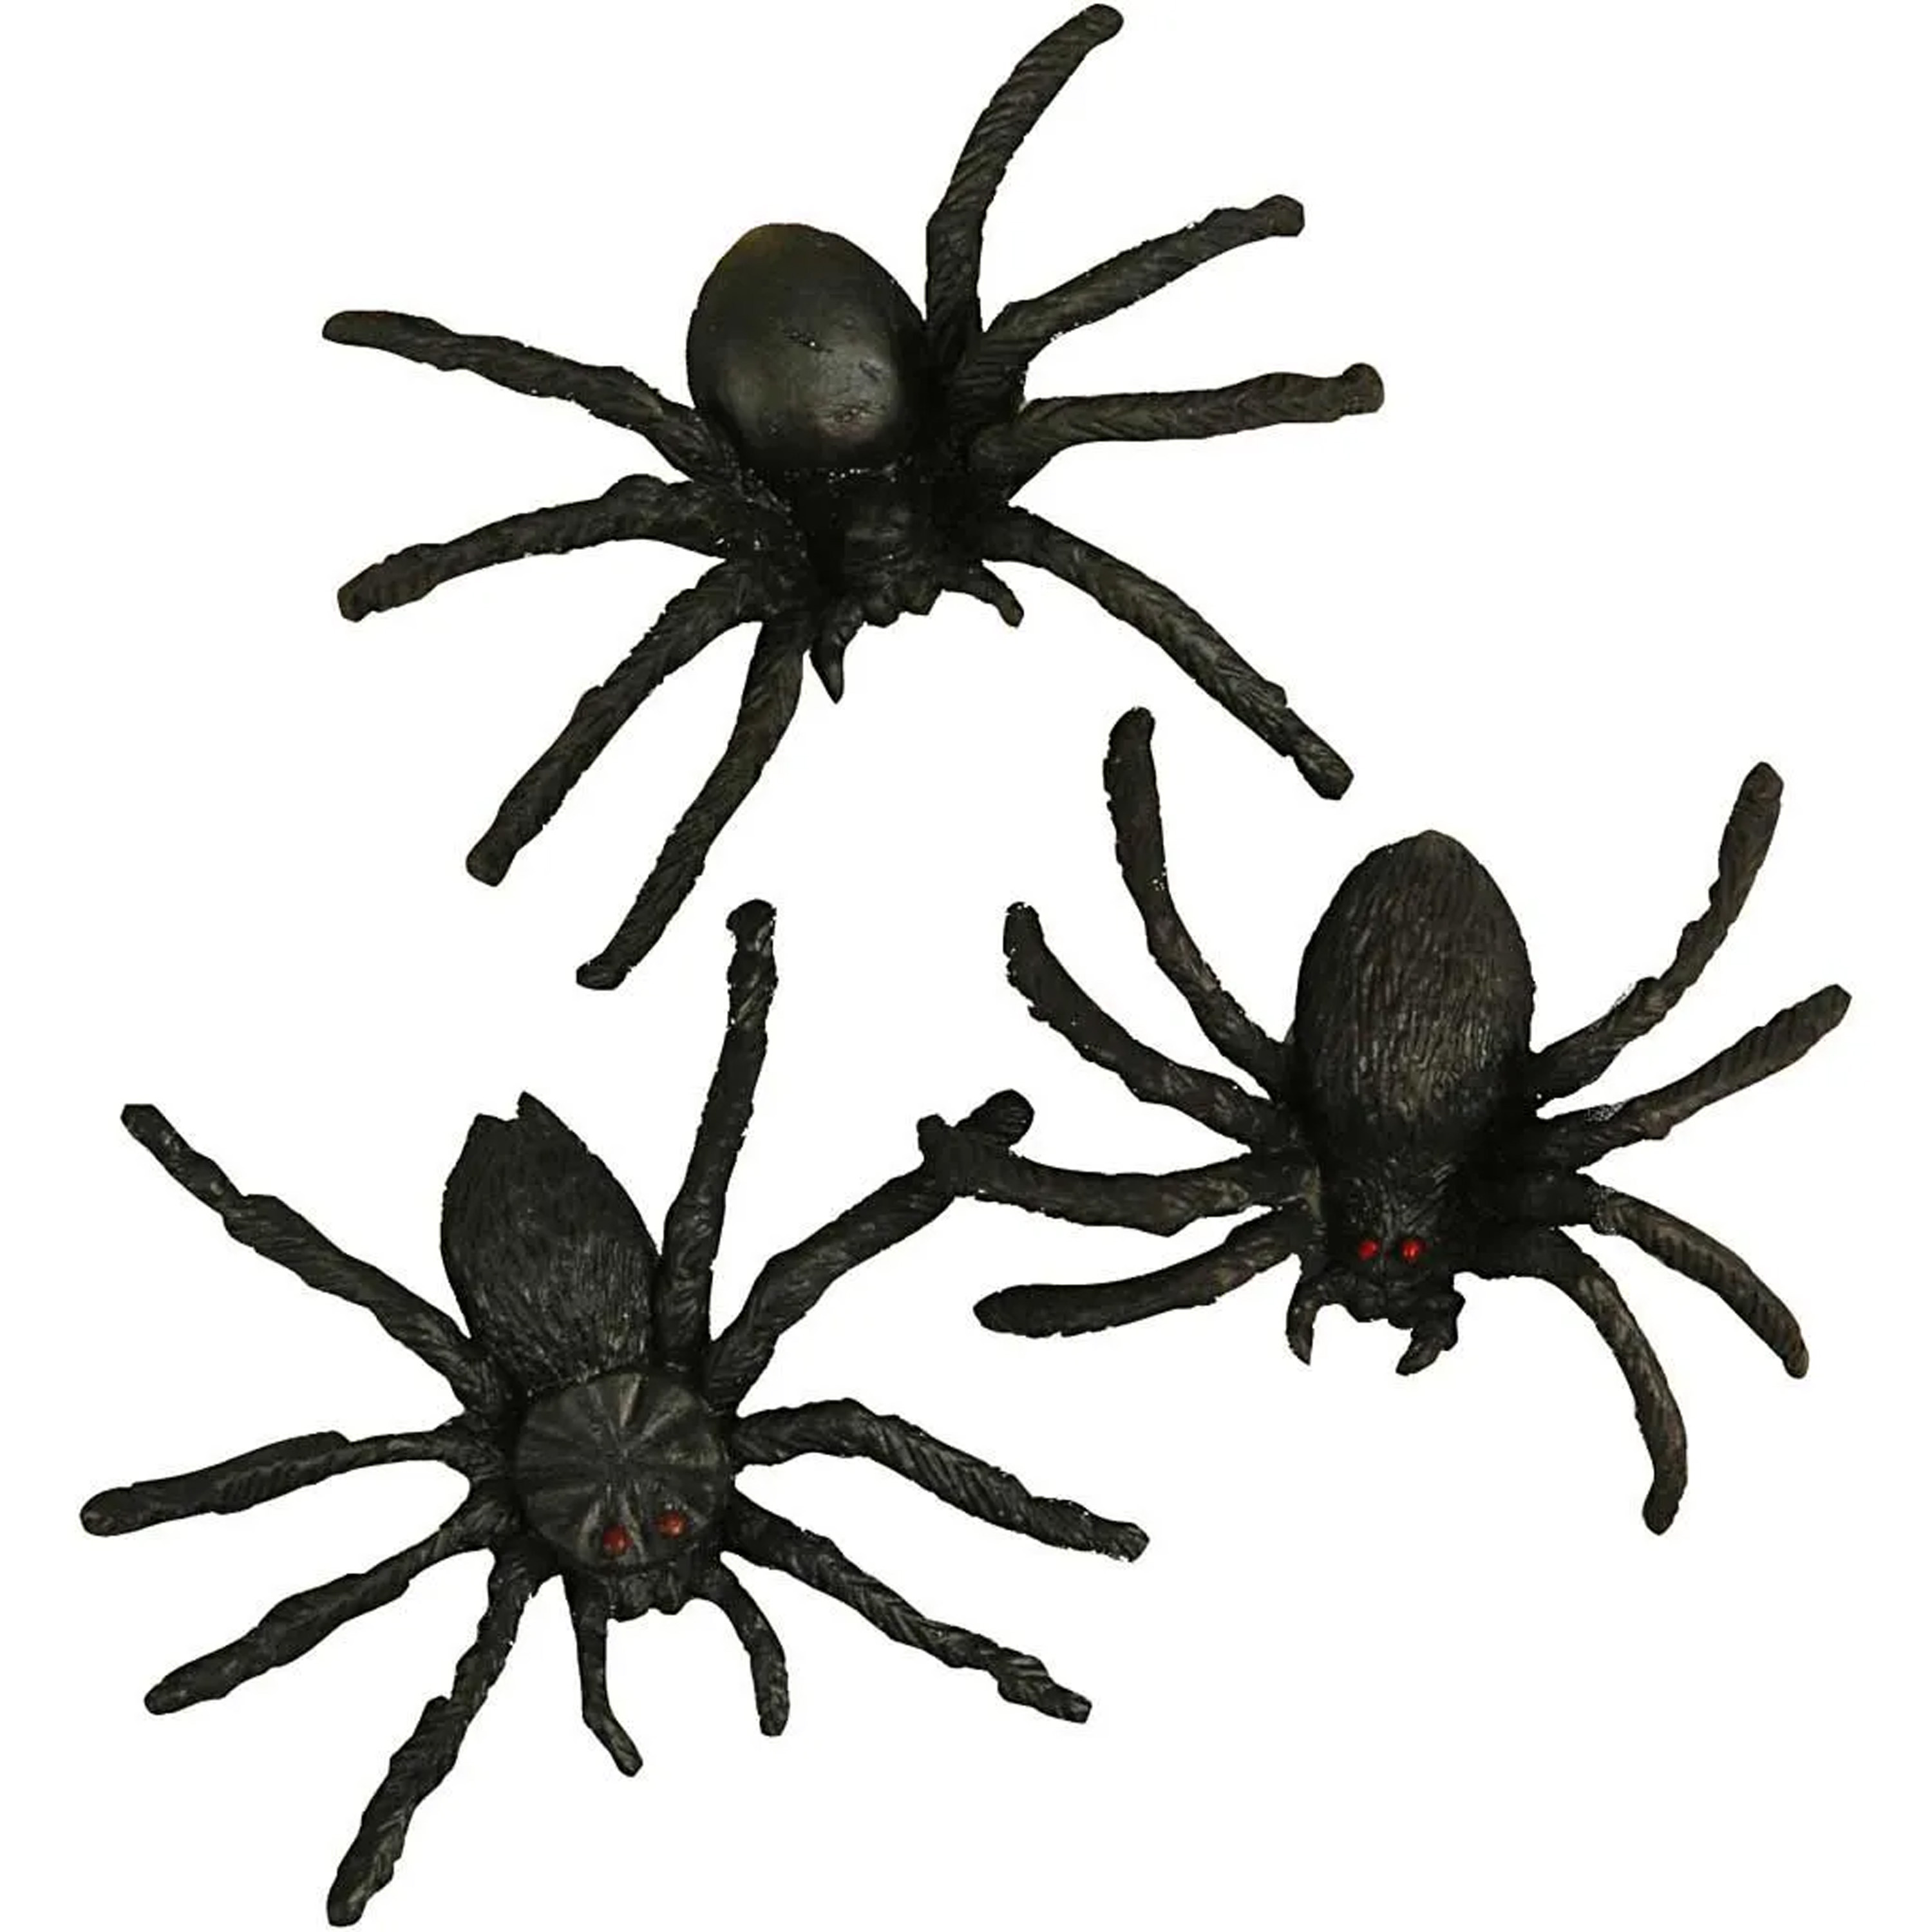 Nep spinnen/spinnetjes 4 cm - zwart - 10x stuks - Horror/griezel thema decoratie beestjes